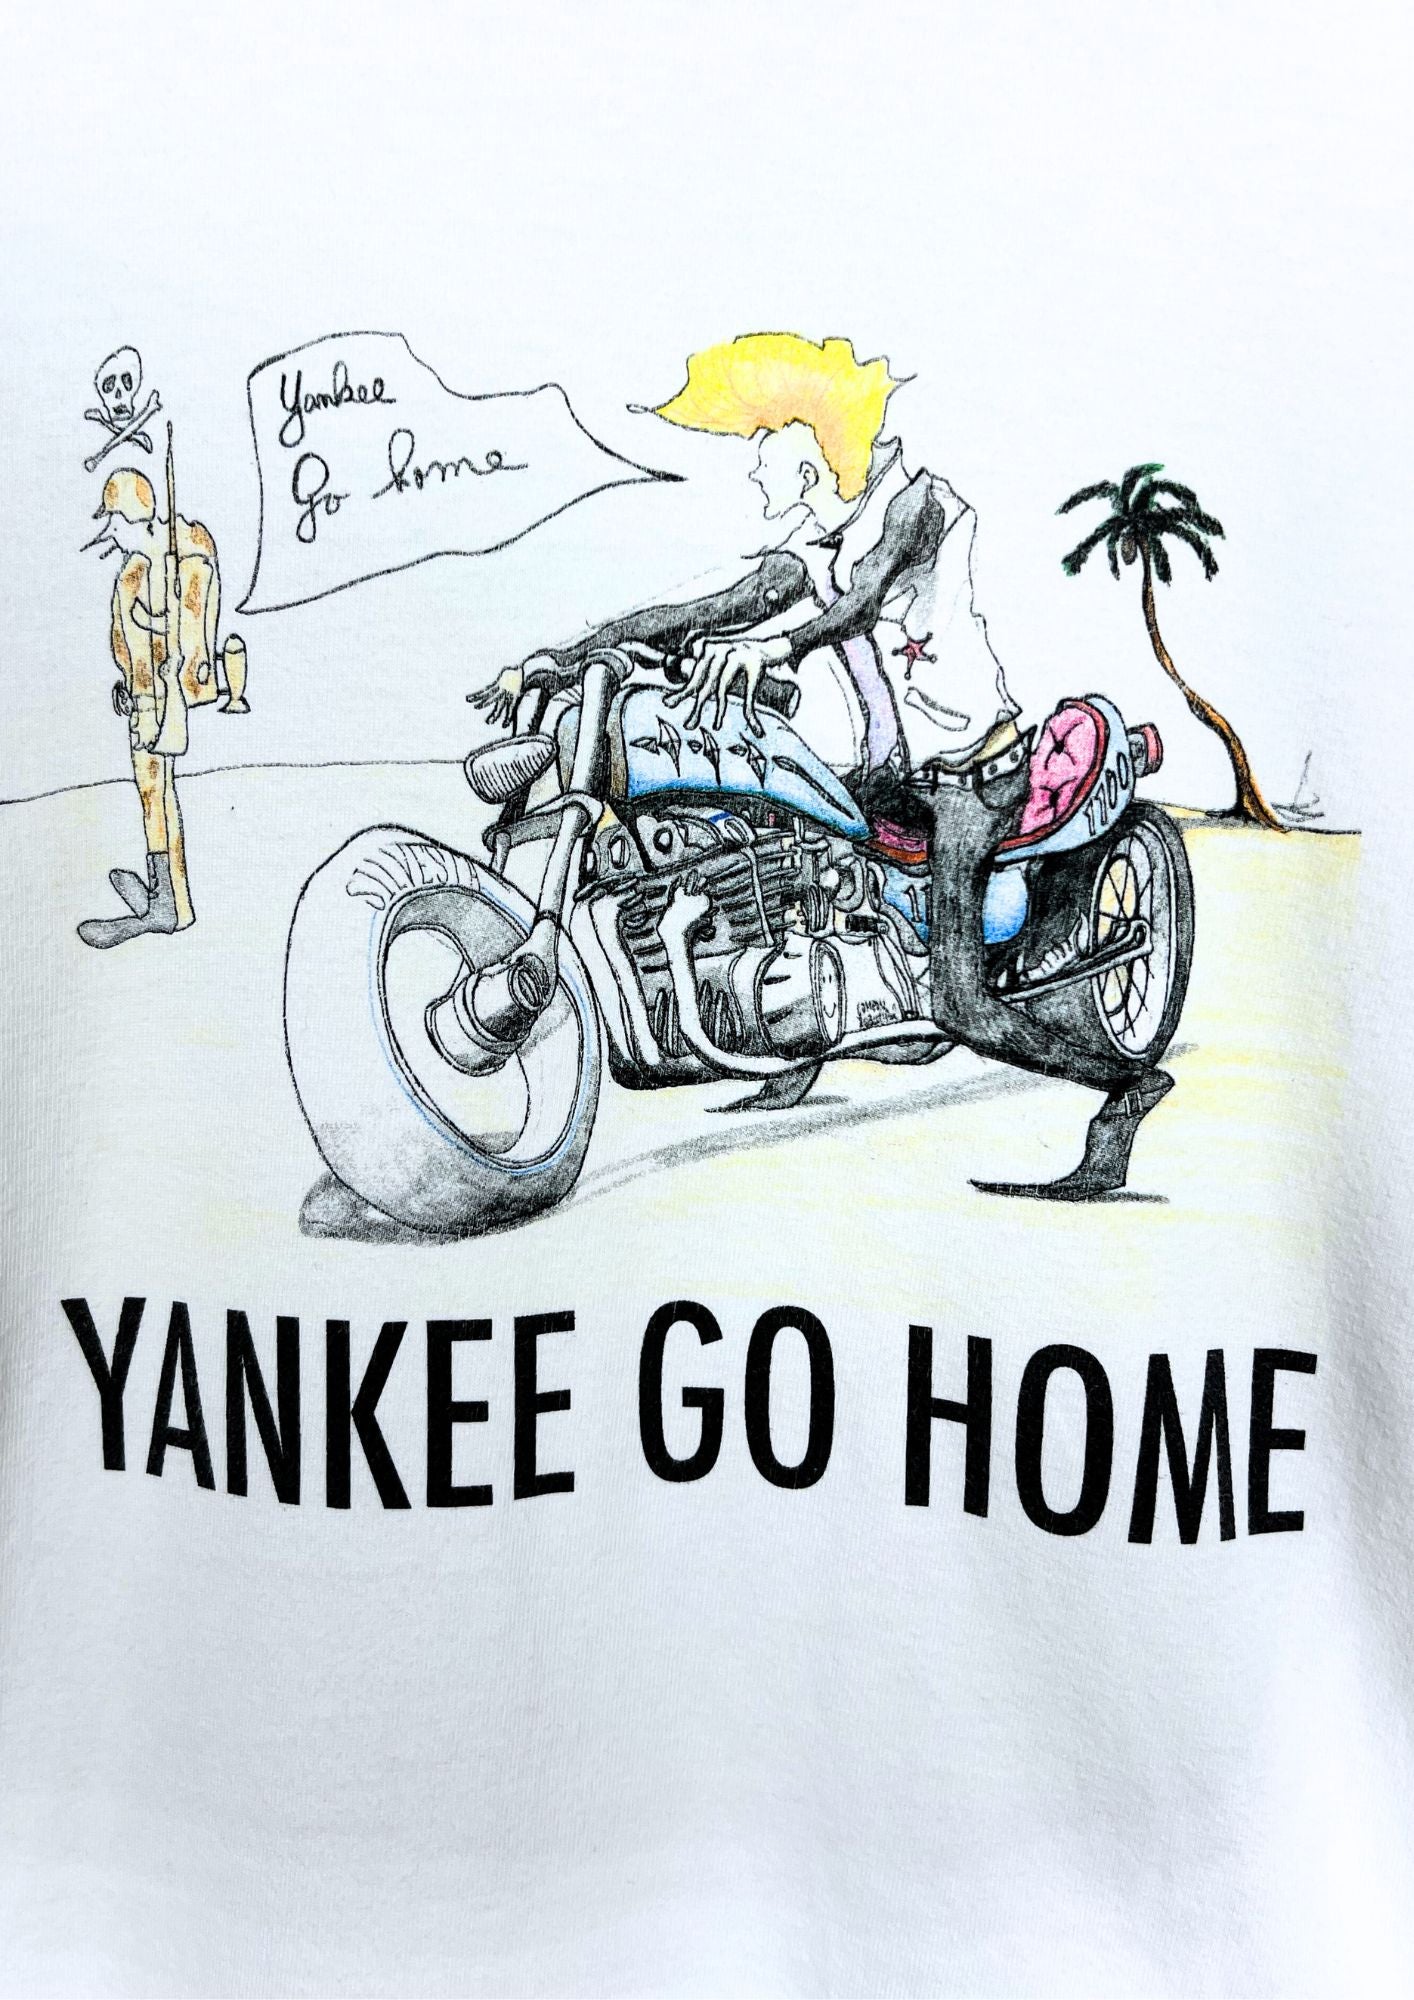 00s SHERBETS Kenichi Asai 'Yankee Go Home' Japanese Band T-shirt